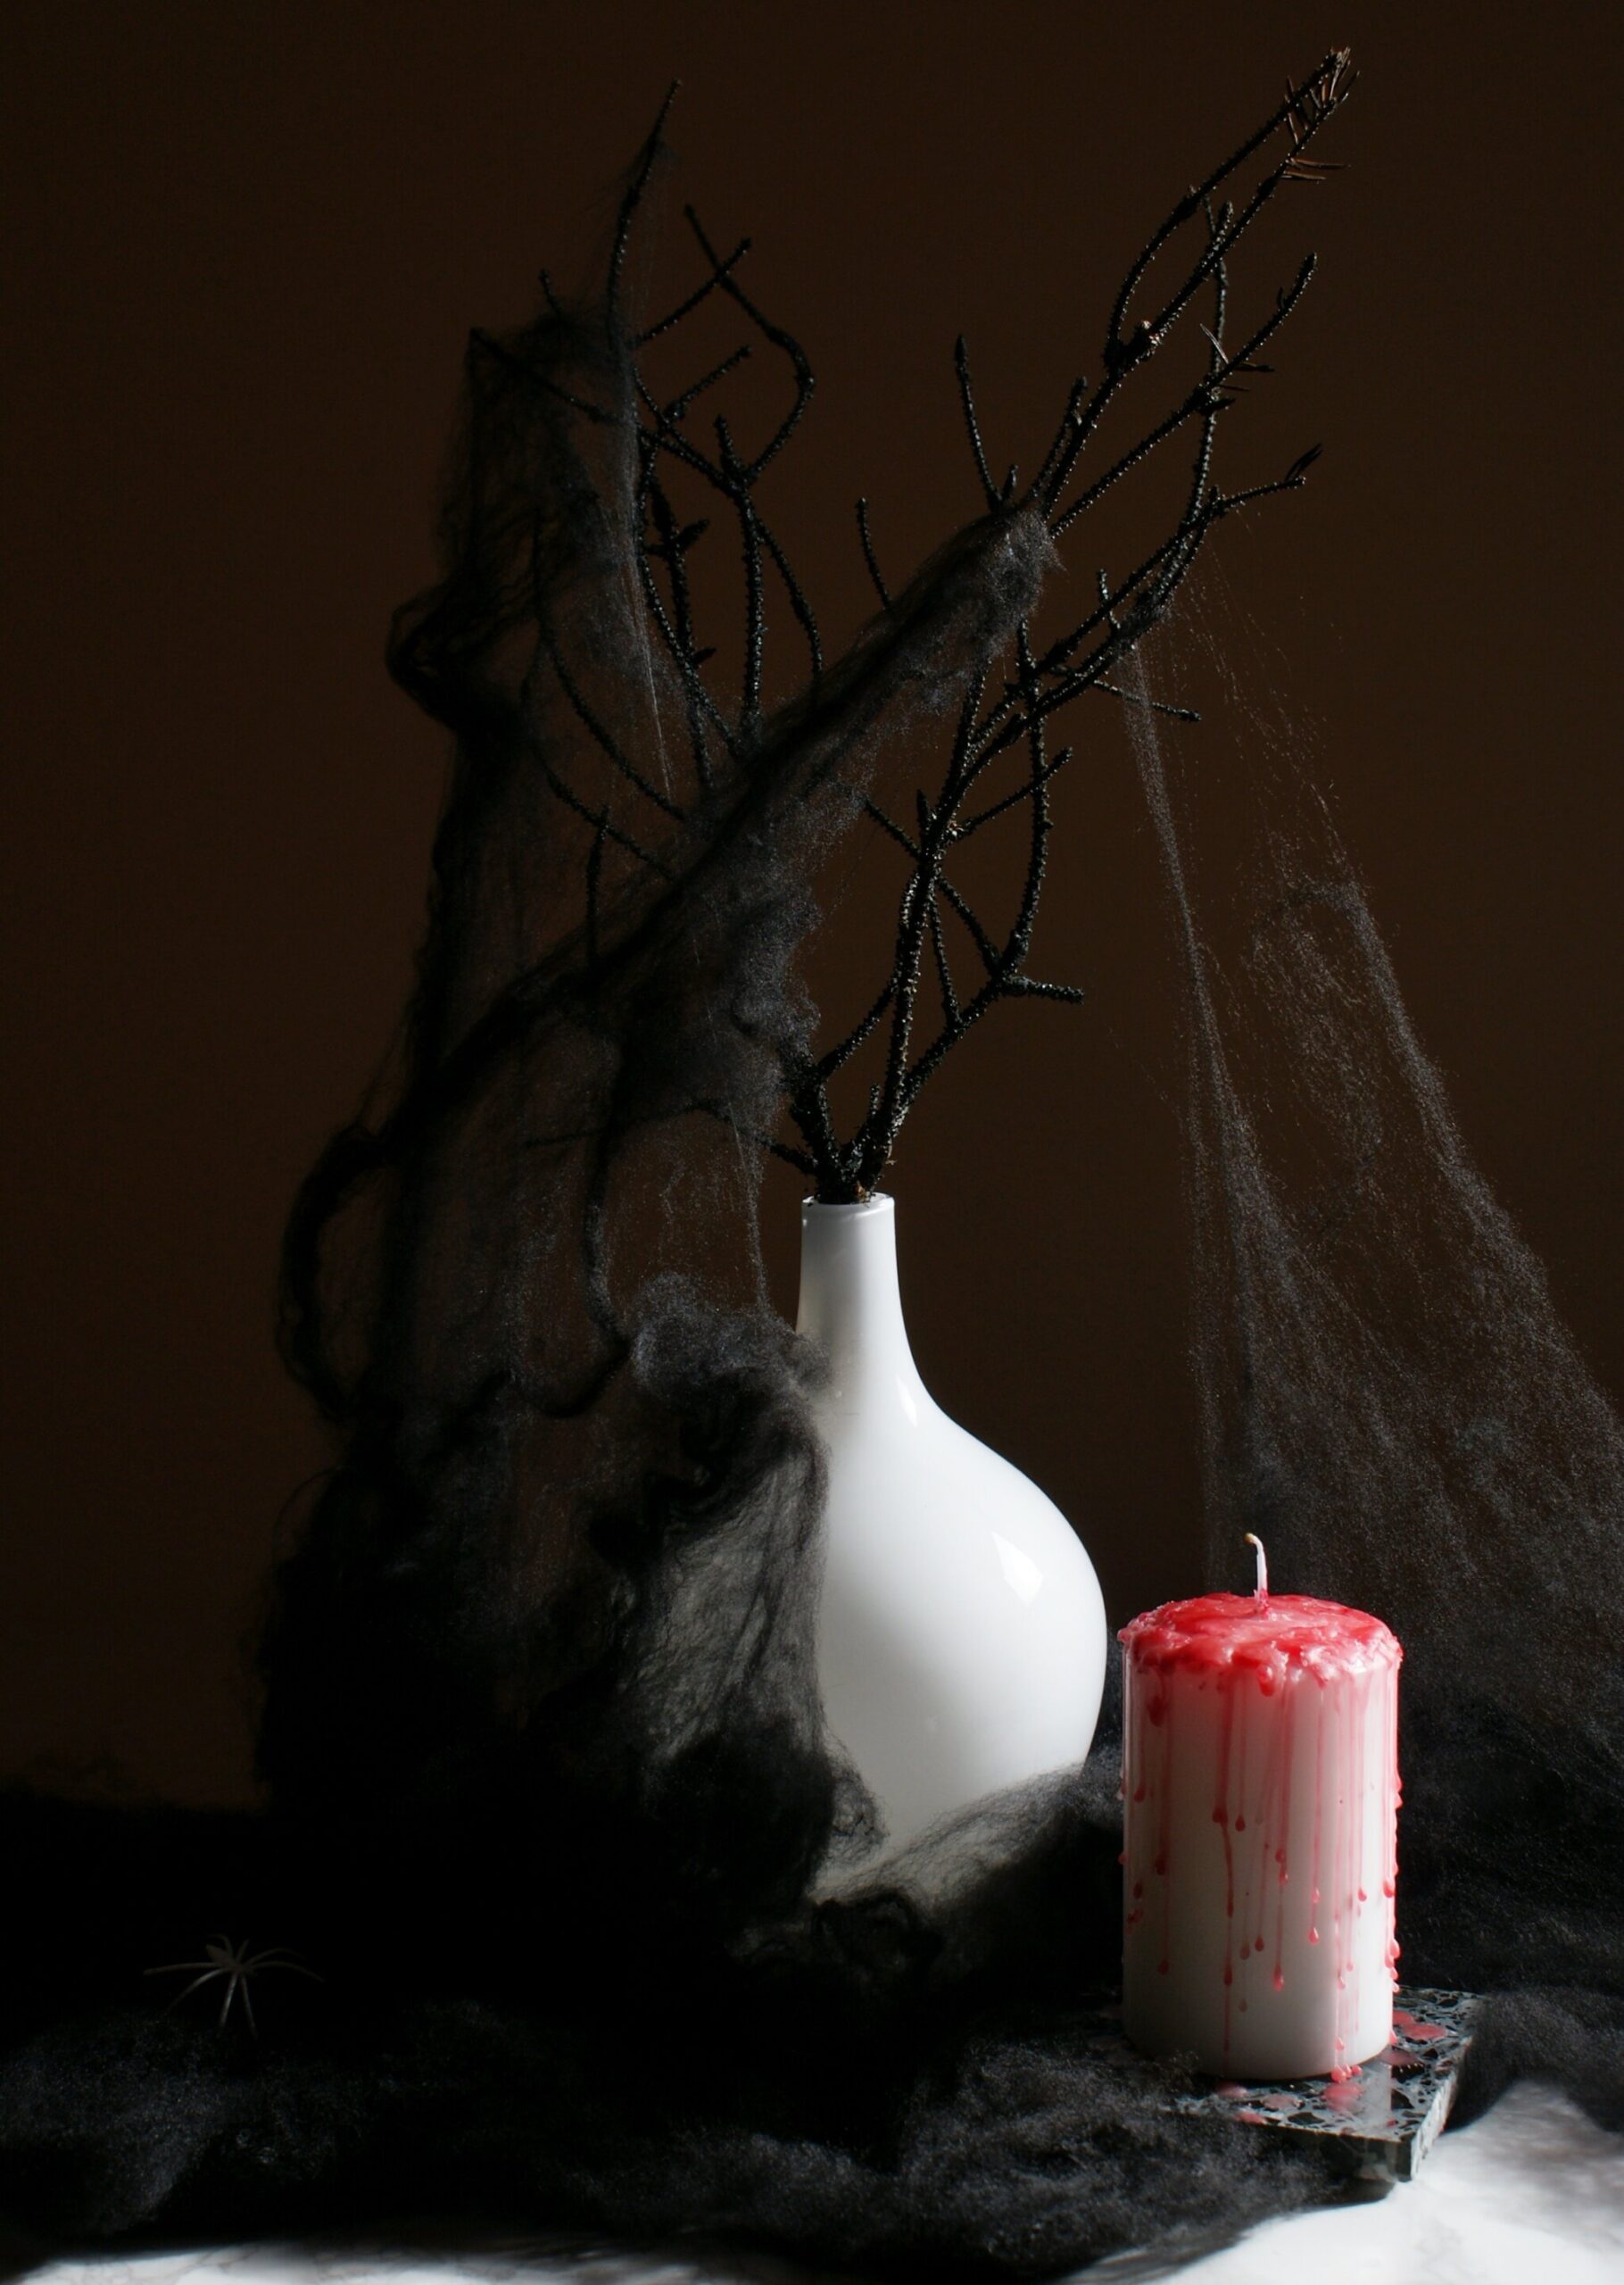 diy halloween decorations home ideas bleeding blood candle black twigs spider faidate idee decor candela sangue francinesplaceblog 1.JPG